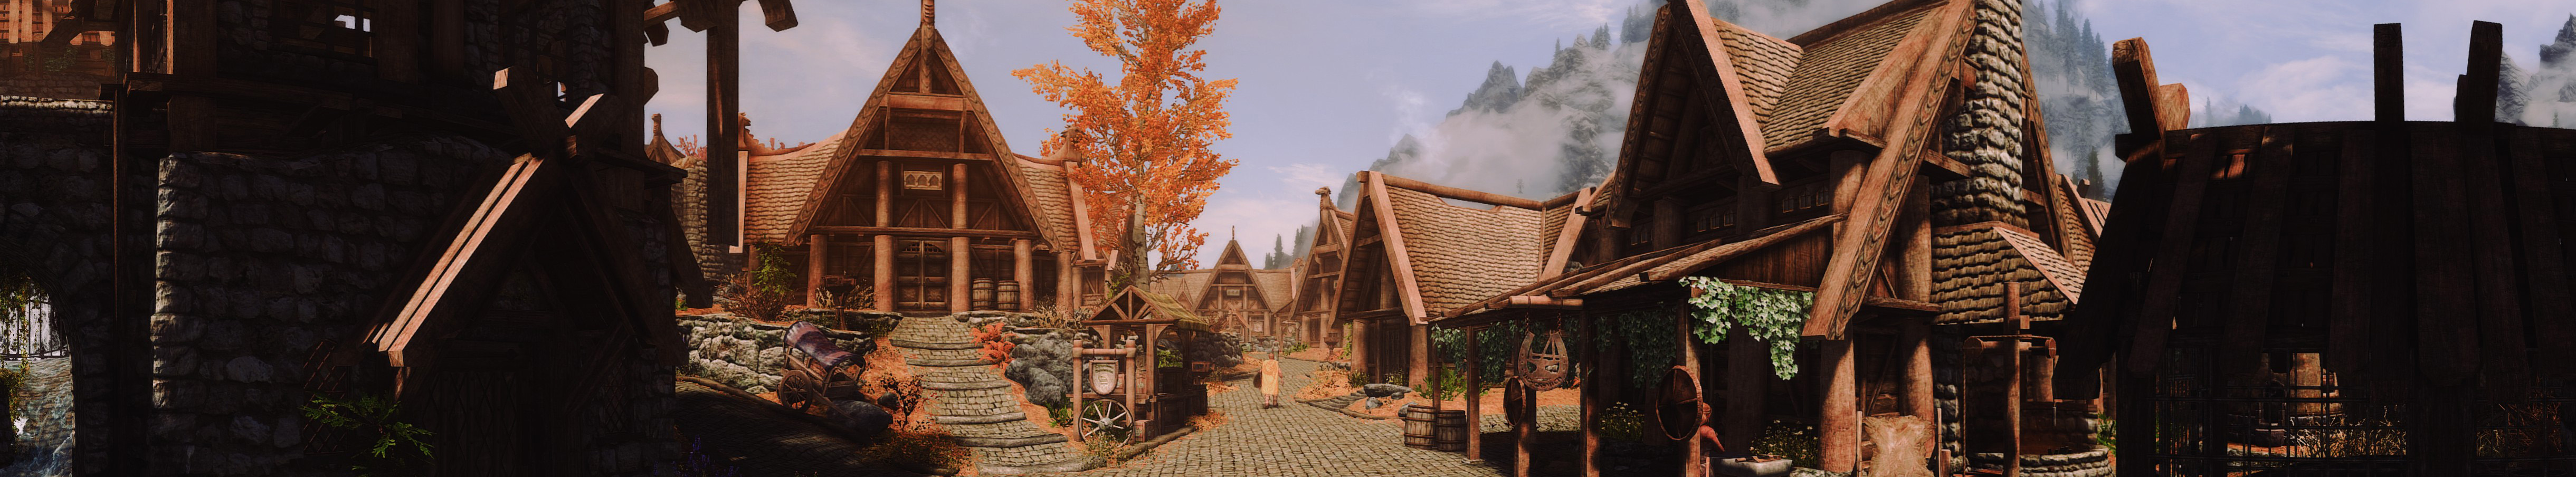 The Elder Scrolls V Skyrim Graphics Card Screen Shot RPG Video Games Whiterun Fantasy Town Fantasy C 4881x904